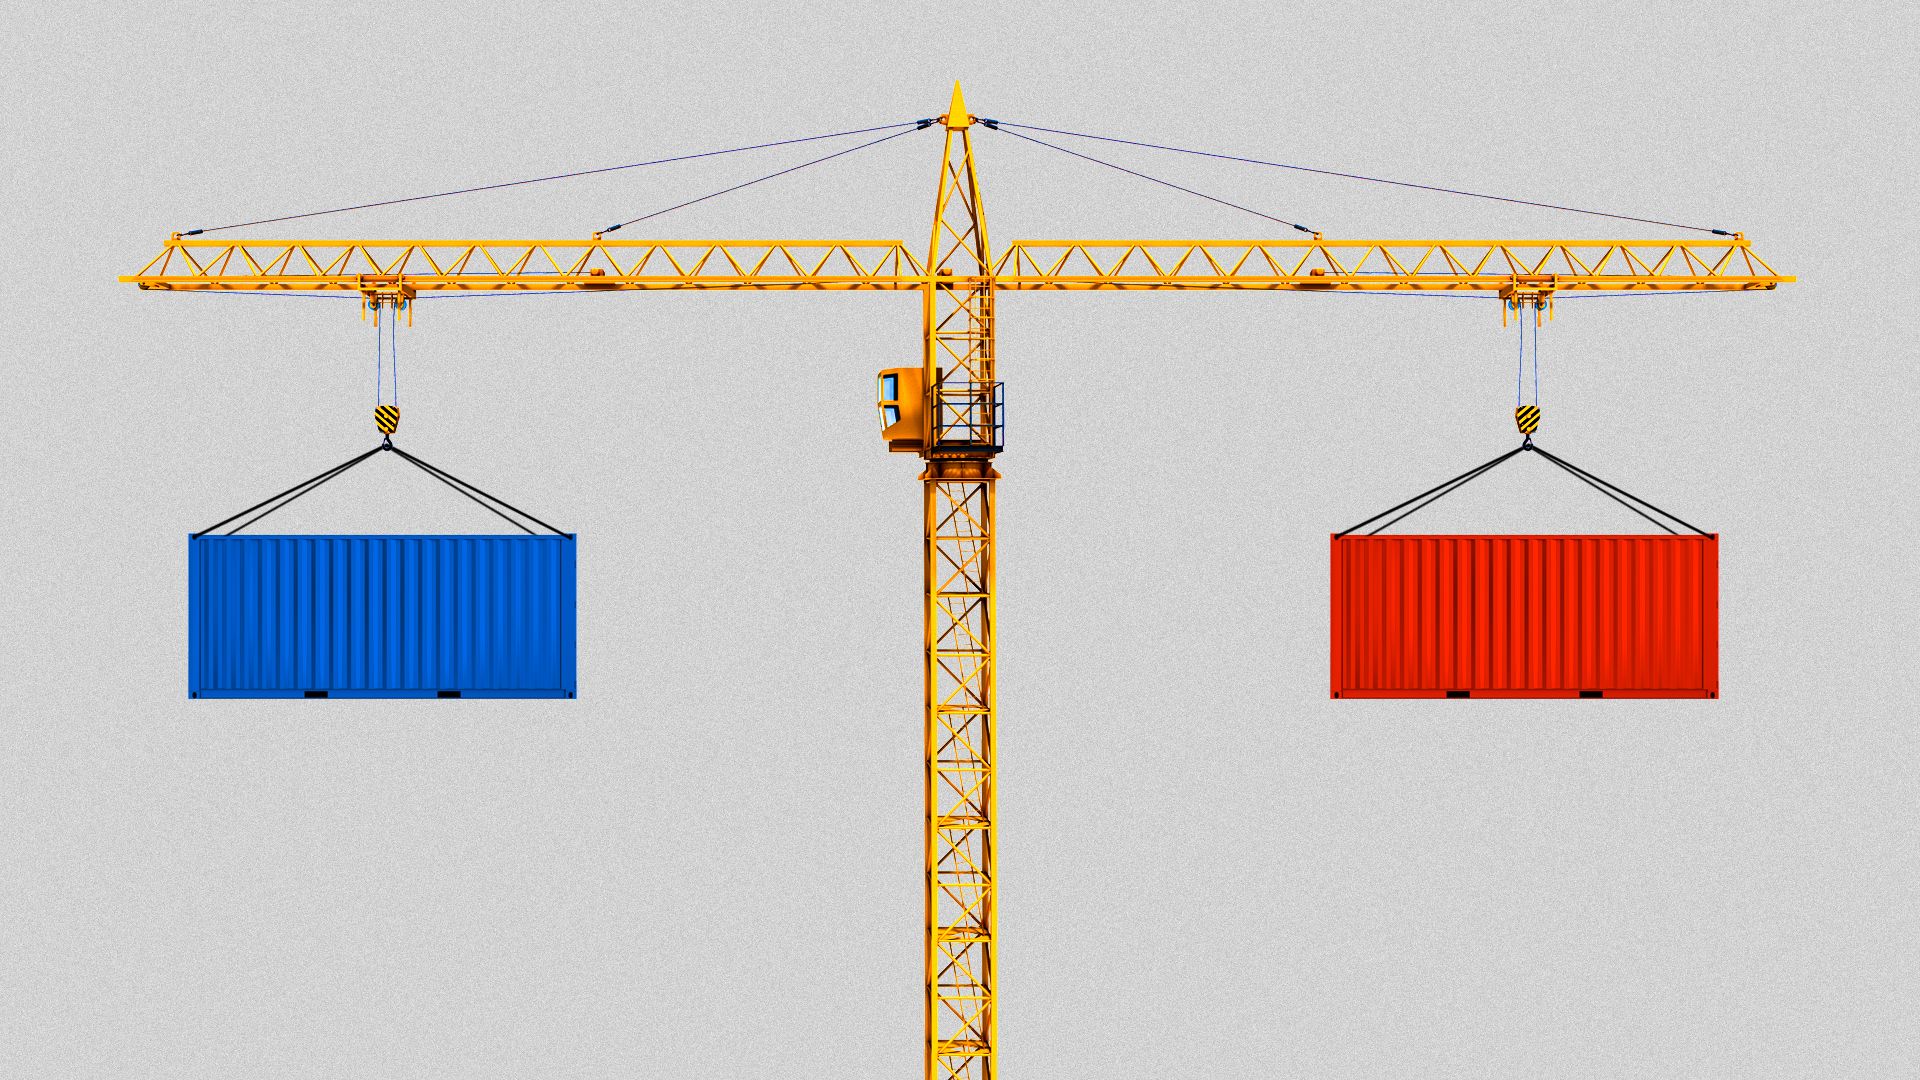 A crane balancing red and blue construction materials